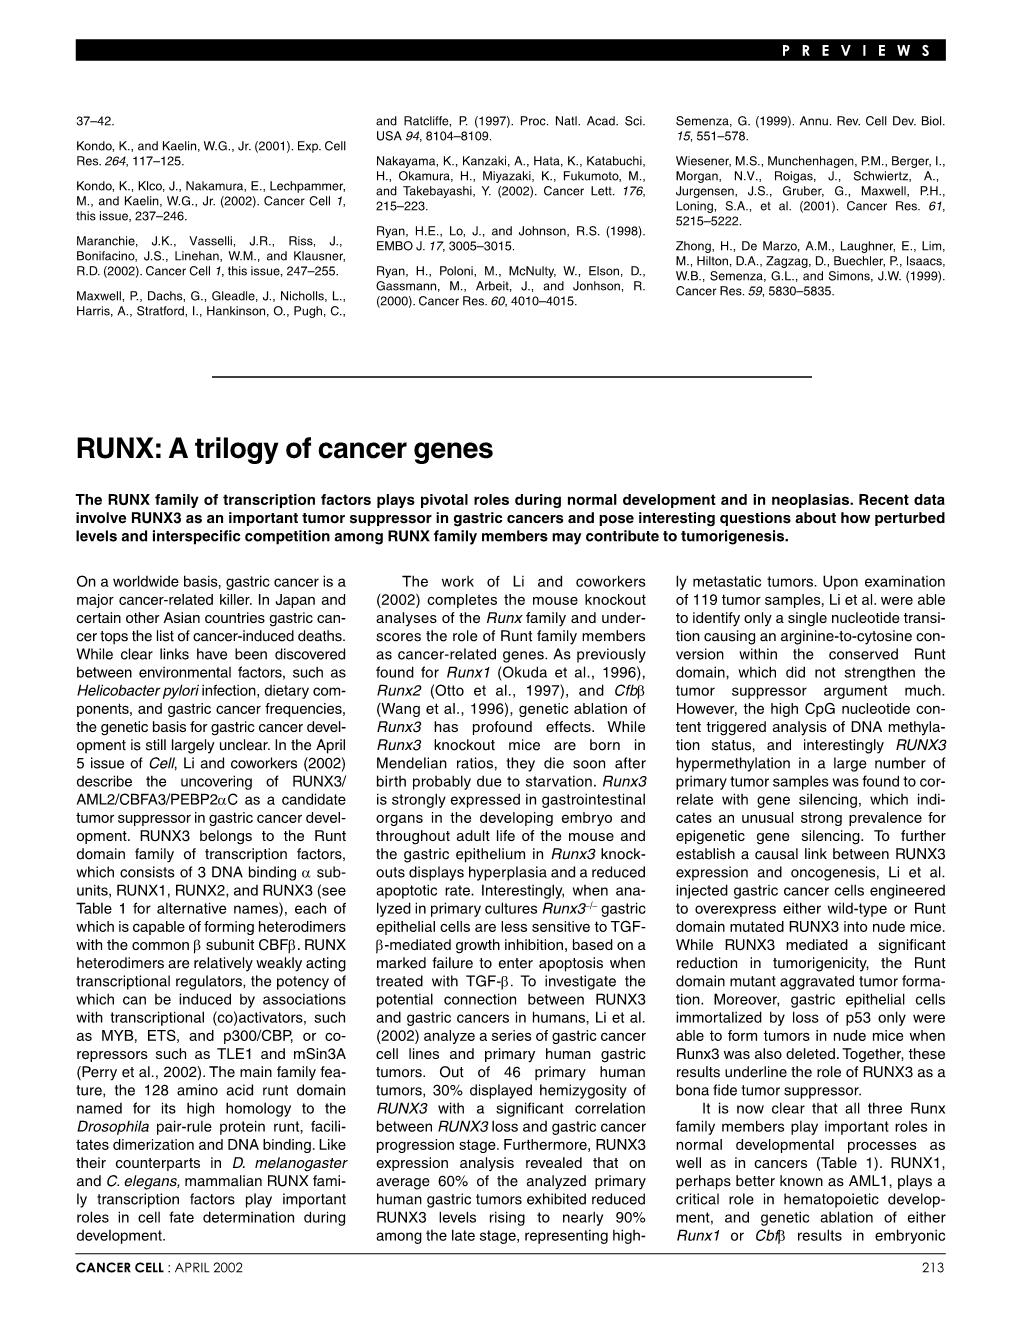 RUNX: a Trilogy of Cancer Genes